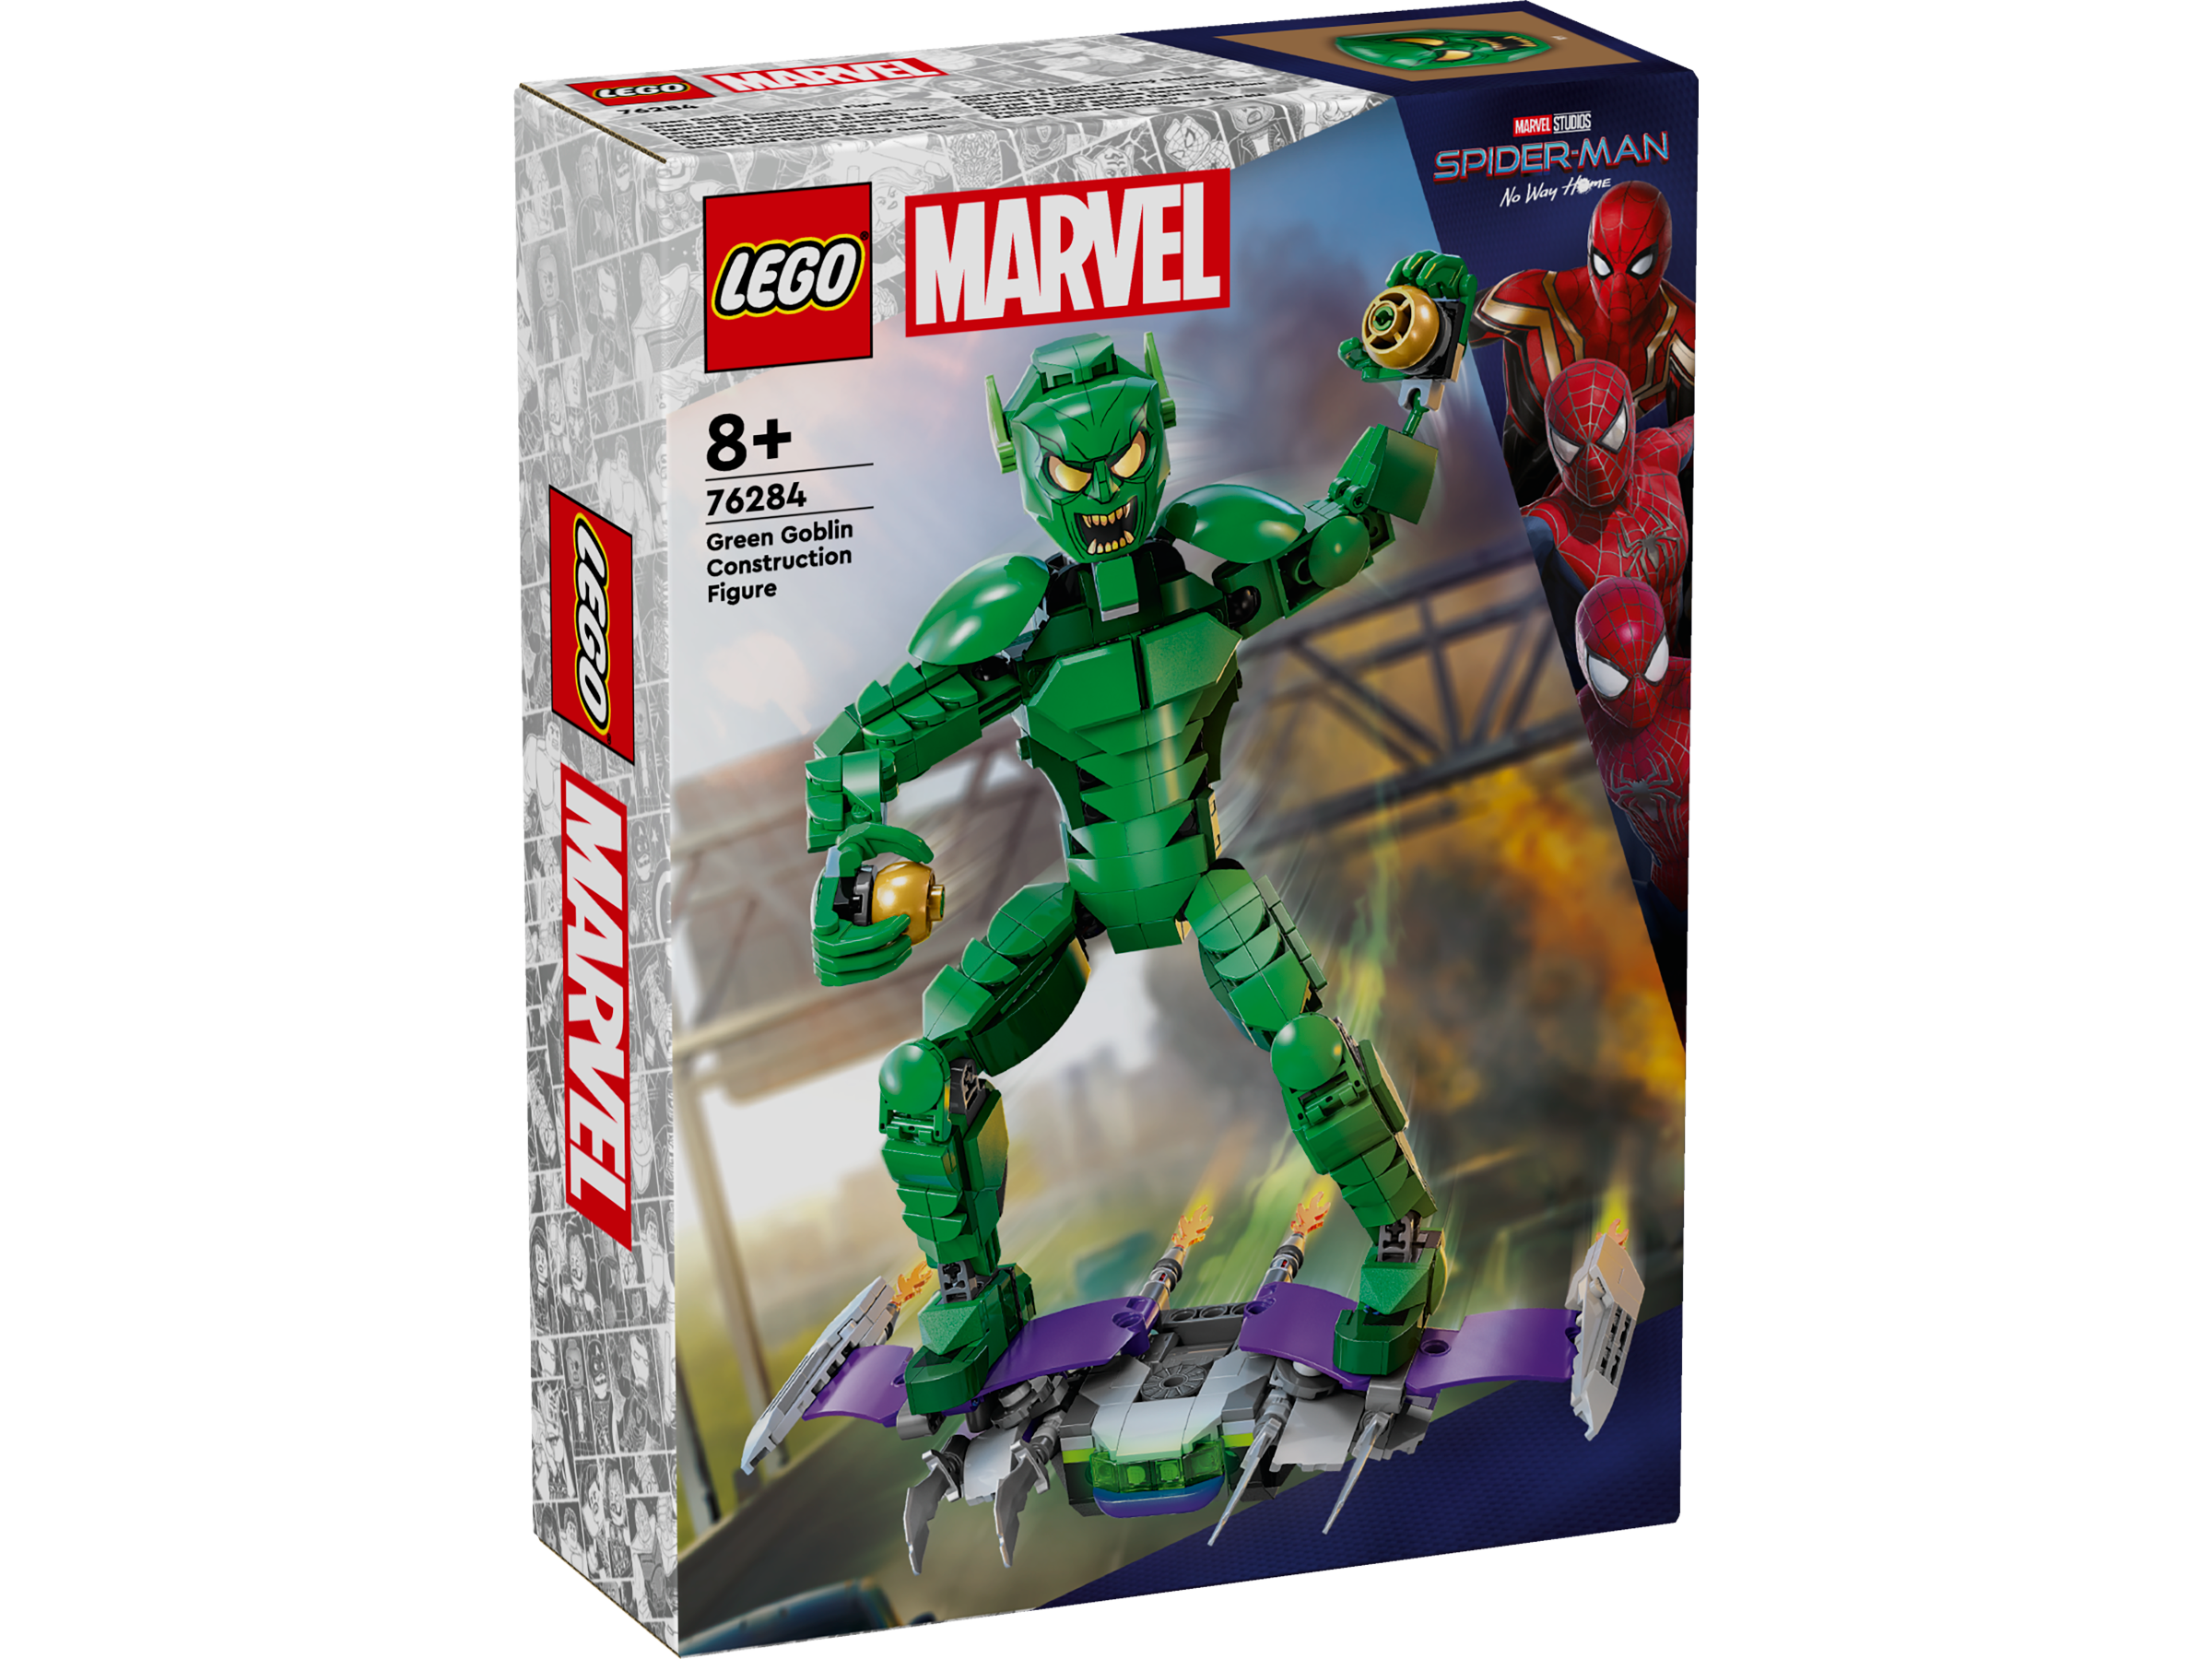 LEGO® Marvel Super Heroes 76284 Green Goblin Construction Figure